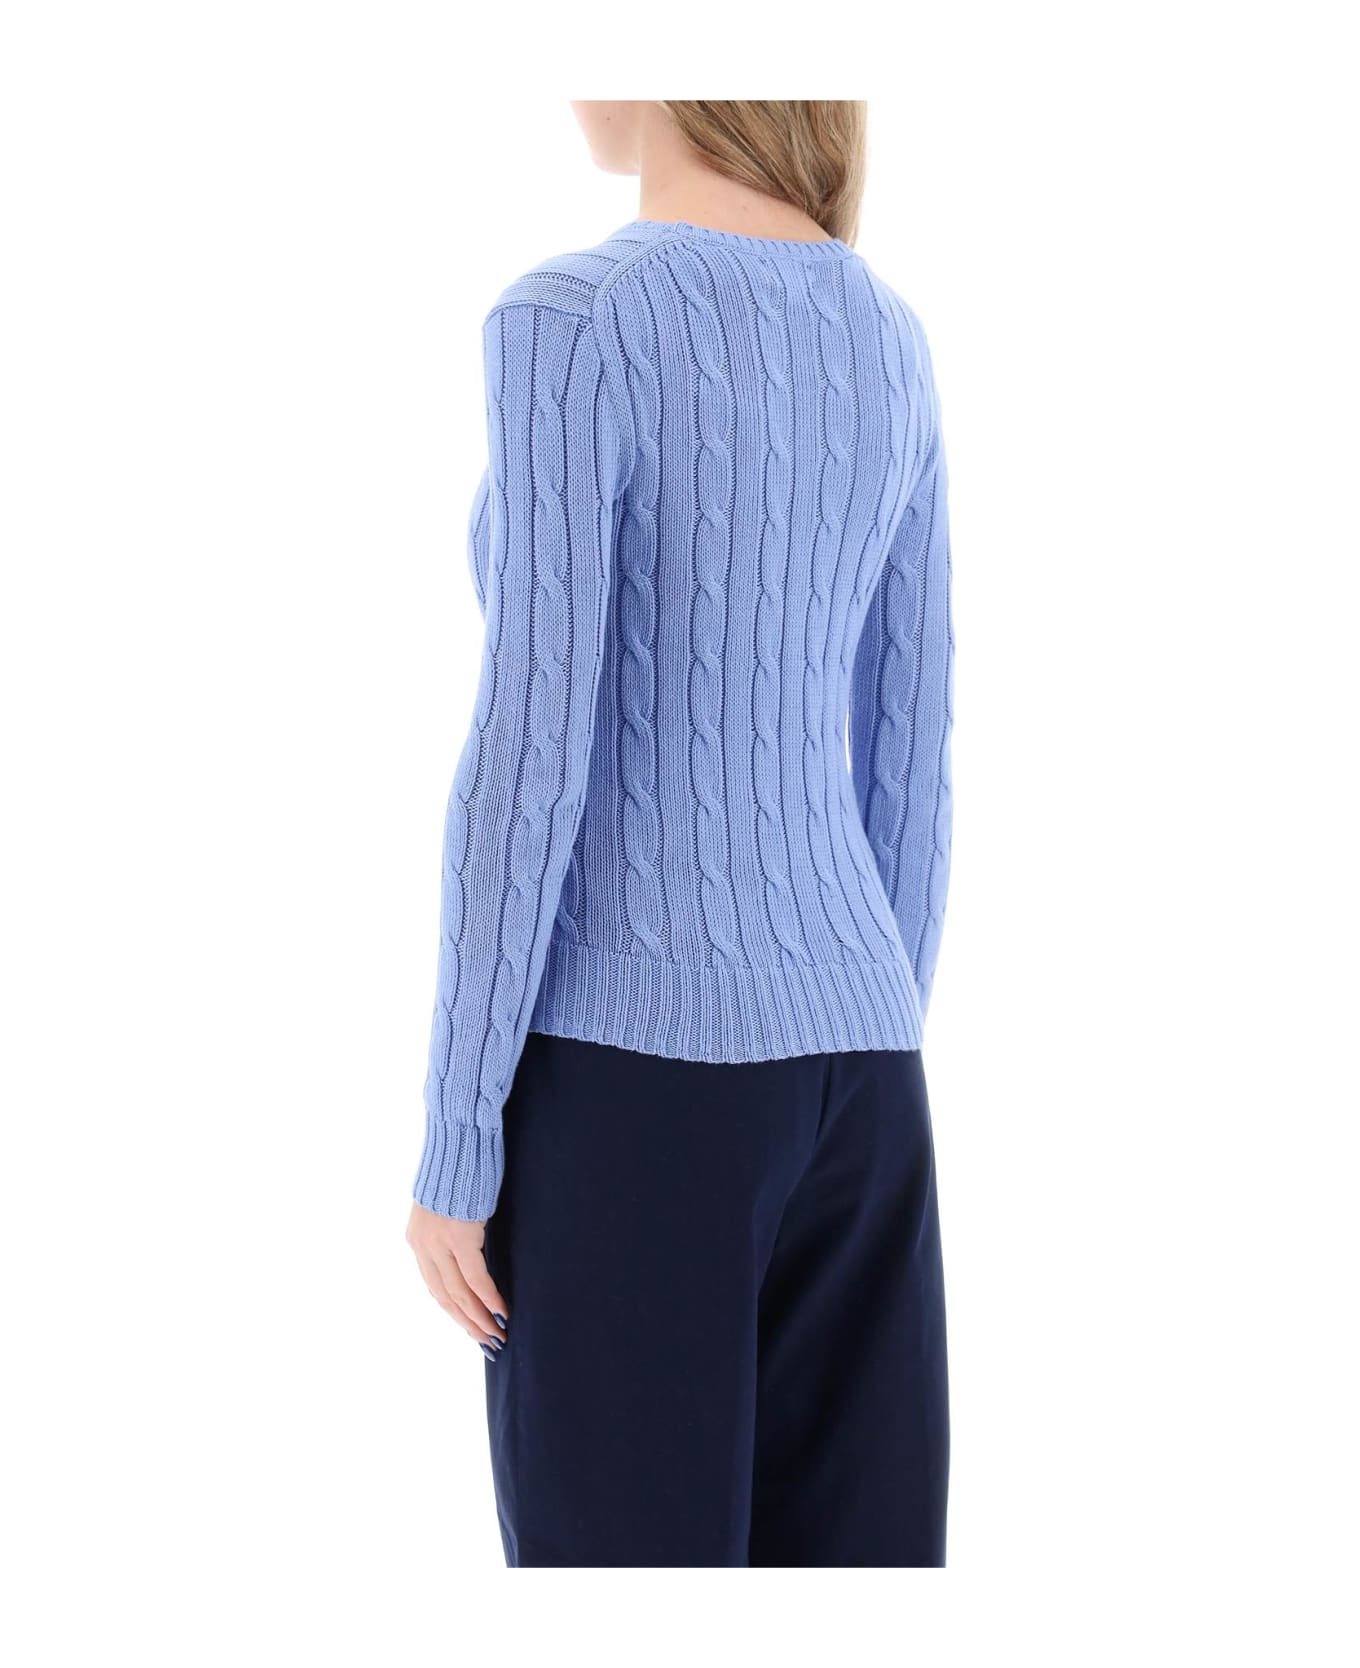 Polo Ralph Lauren Cable Knit Cotton Sweater - NEW LITCHFIELD BLUE (Light blue)